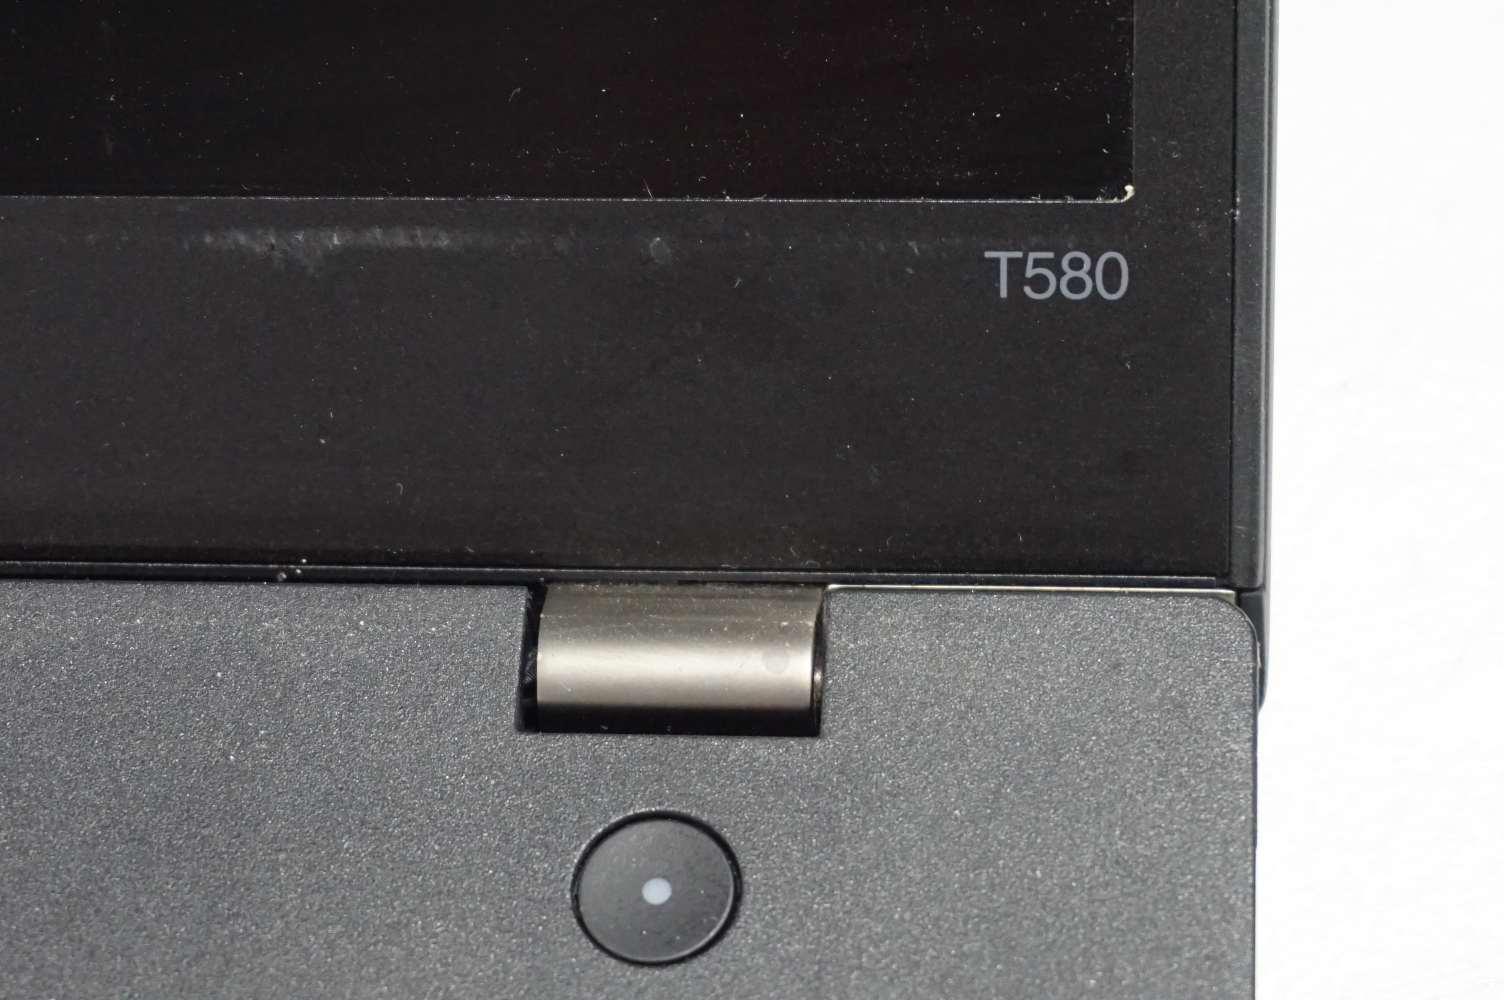 Lenovo ThinkPad T580 8th Gen Intel i5 Laptop (Ser#R90VKWP2)